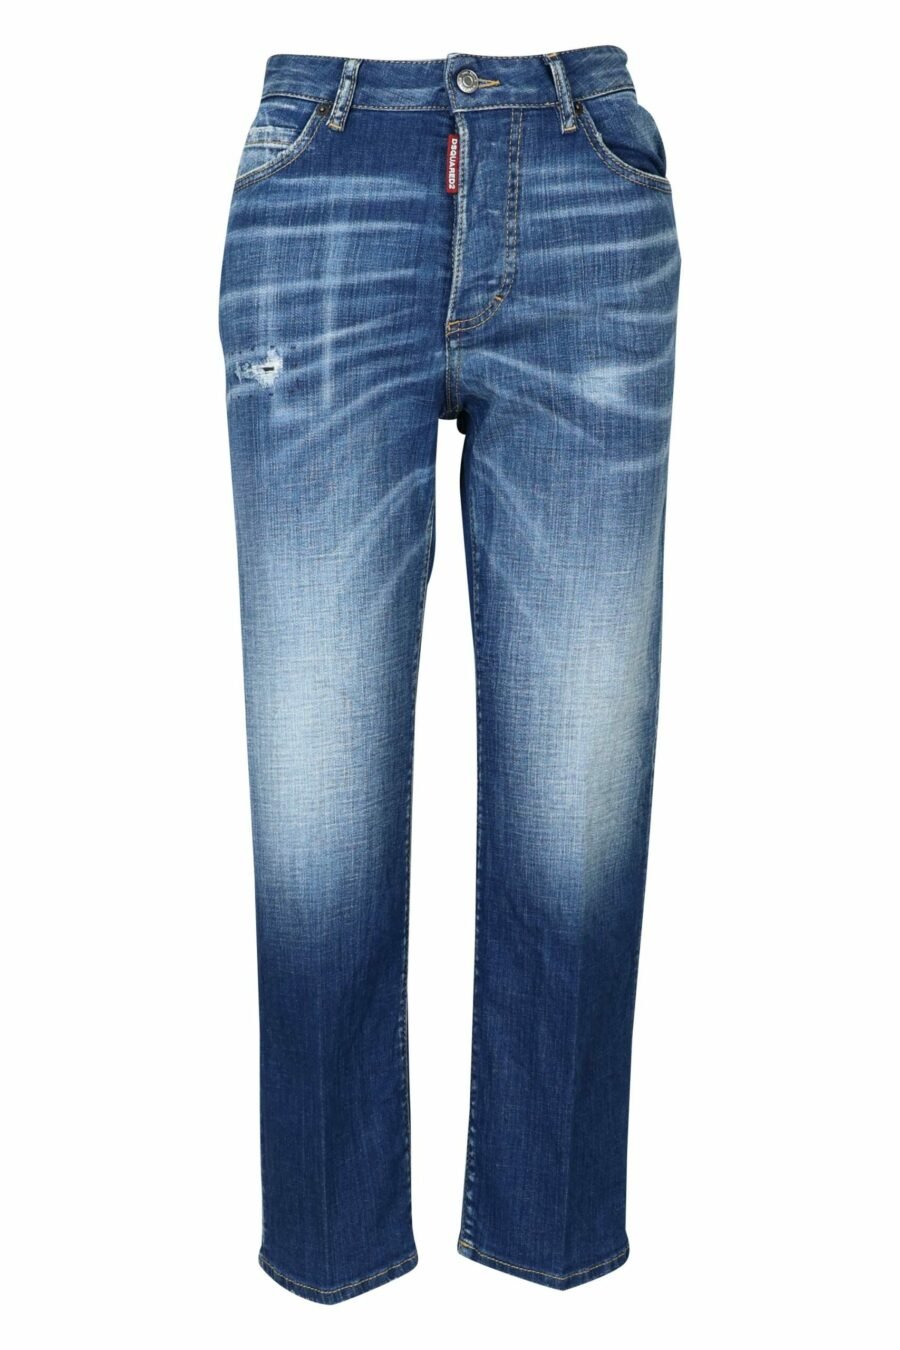 Blaue "Boston Jeans" getragene Hose - 8054148460044 skaliert